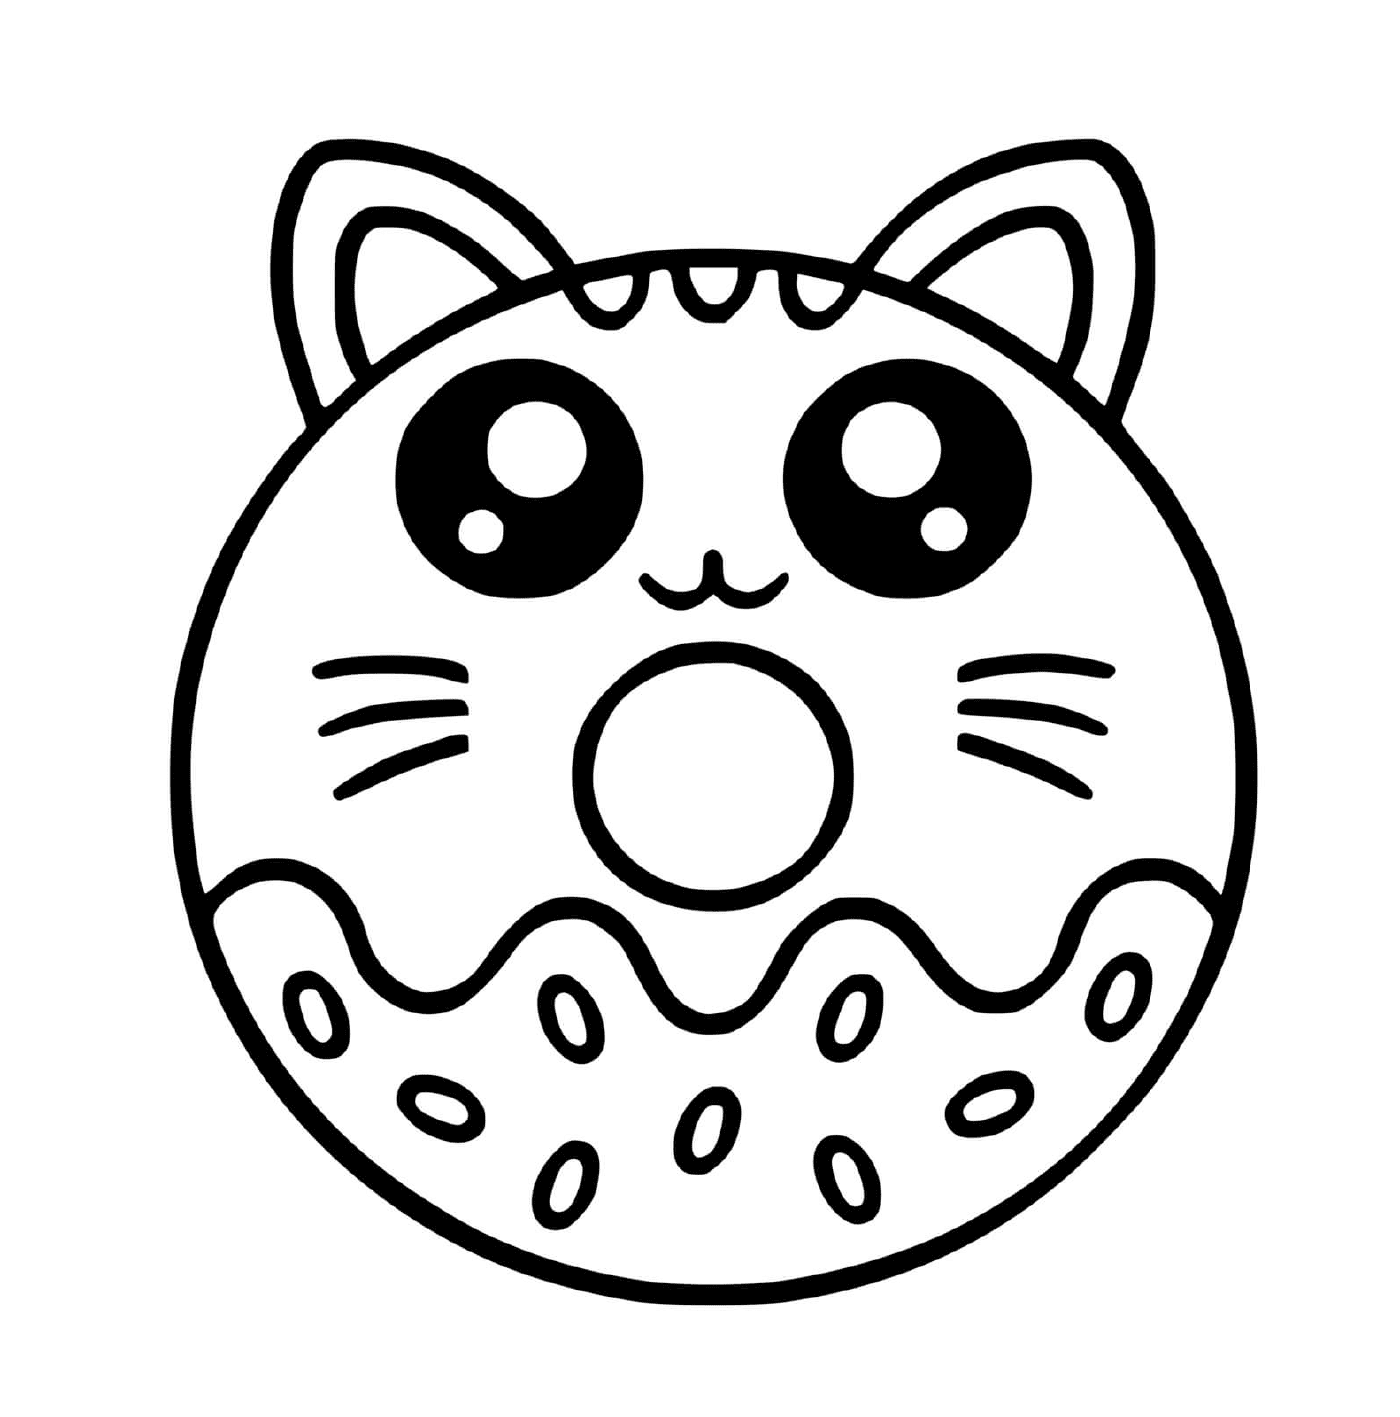  Donut-chat kawaii, niedlicher Gourmand 